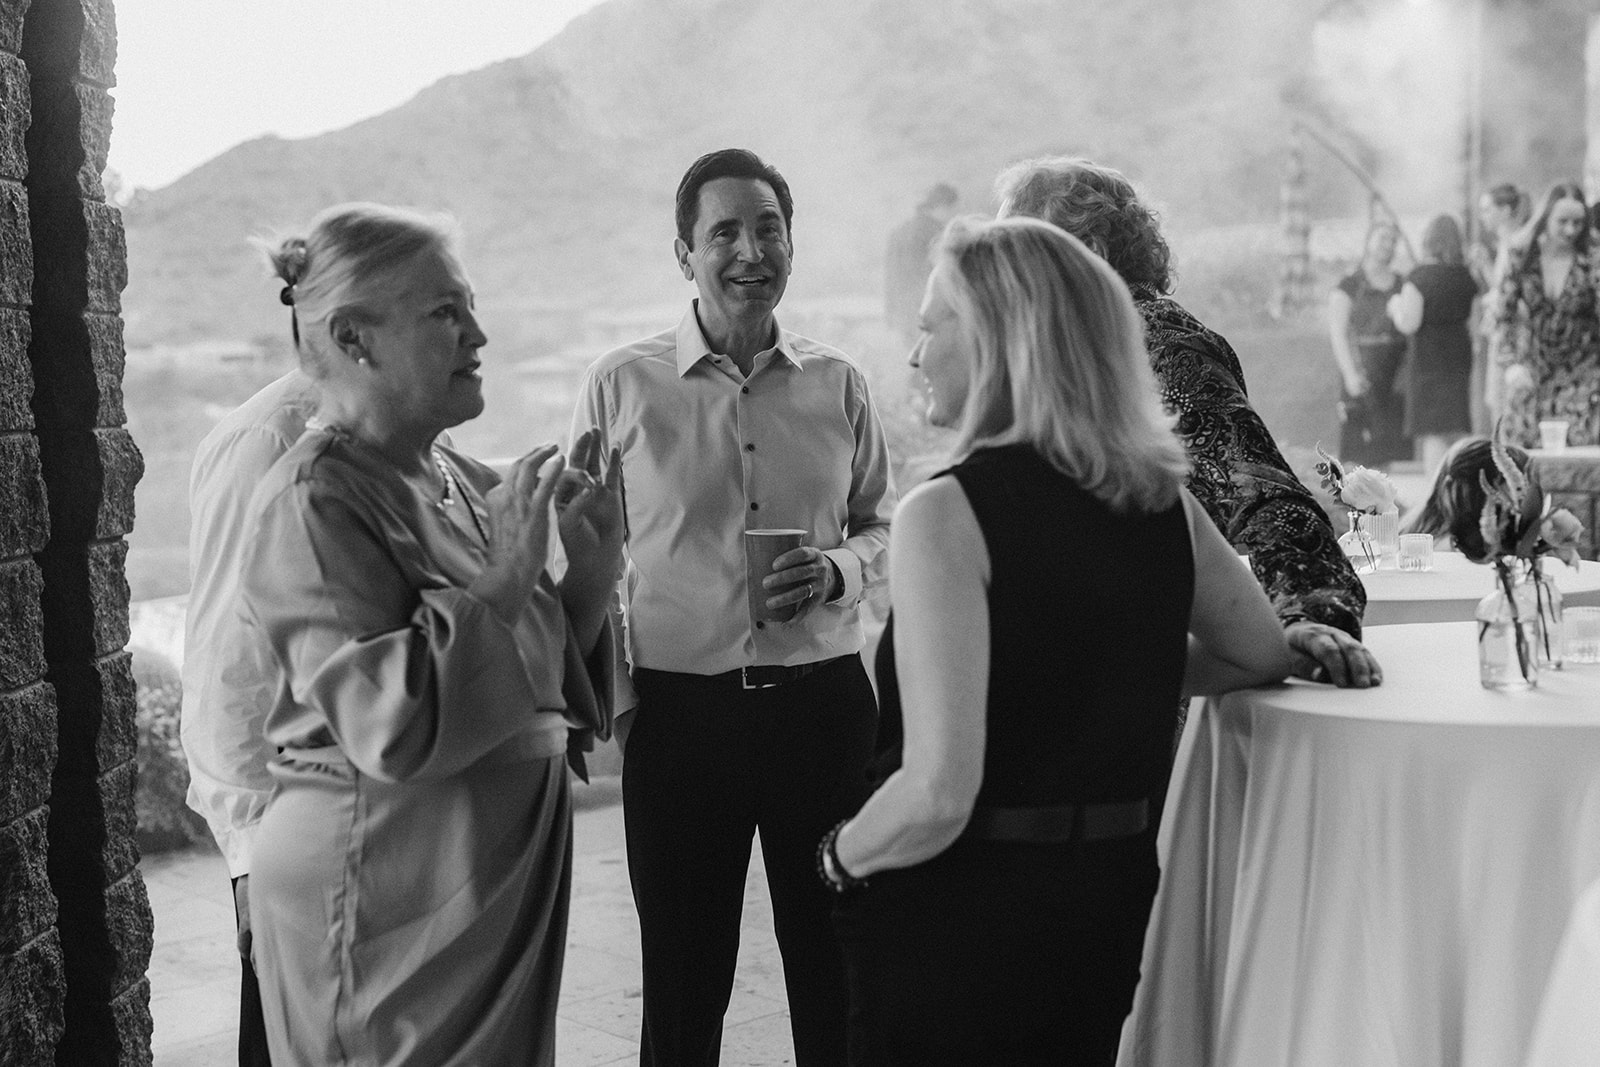 documentary family candids at outdoor wedding reception in phoenix arizona brianna kirk photography